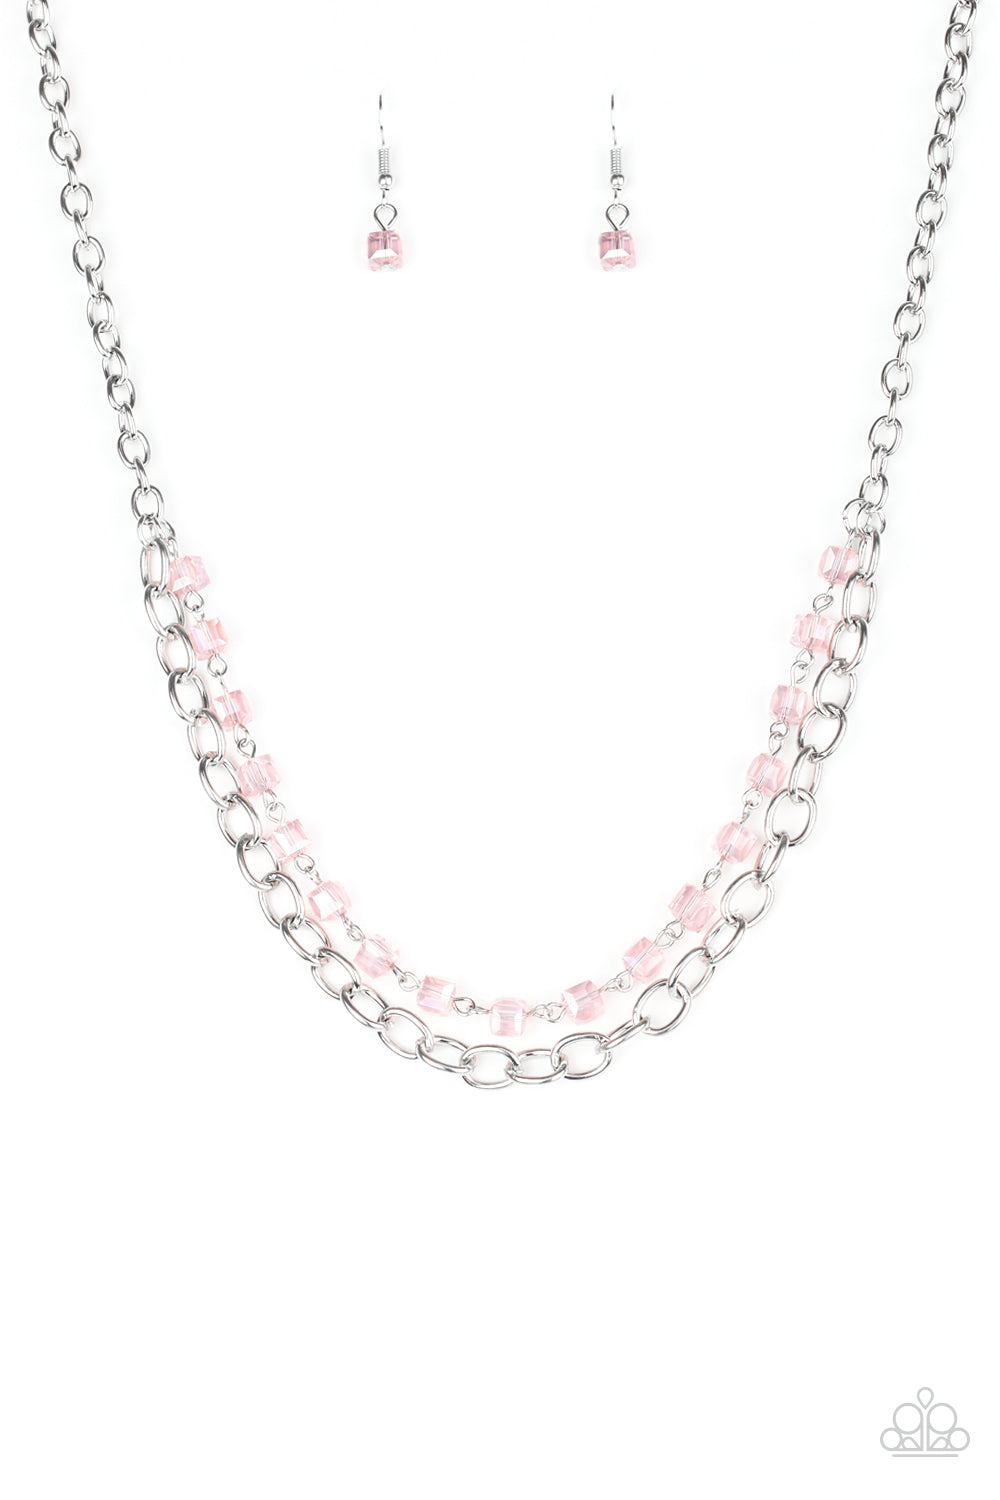 Block Party Princess  - Pink Necklace freeshipping - JewLz4u Gemstone Gallery